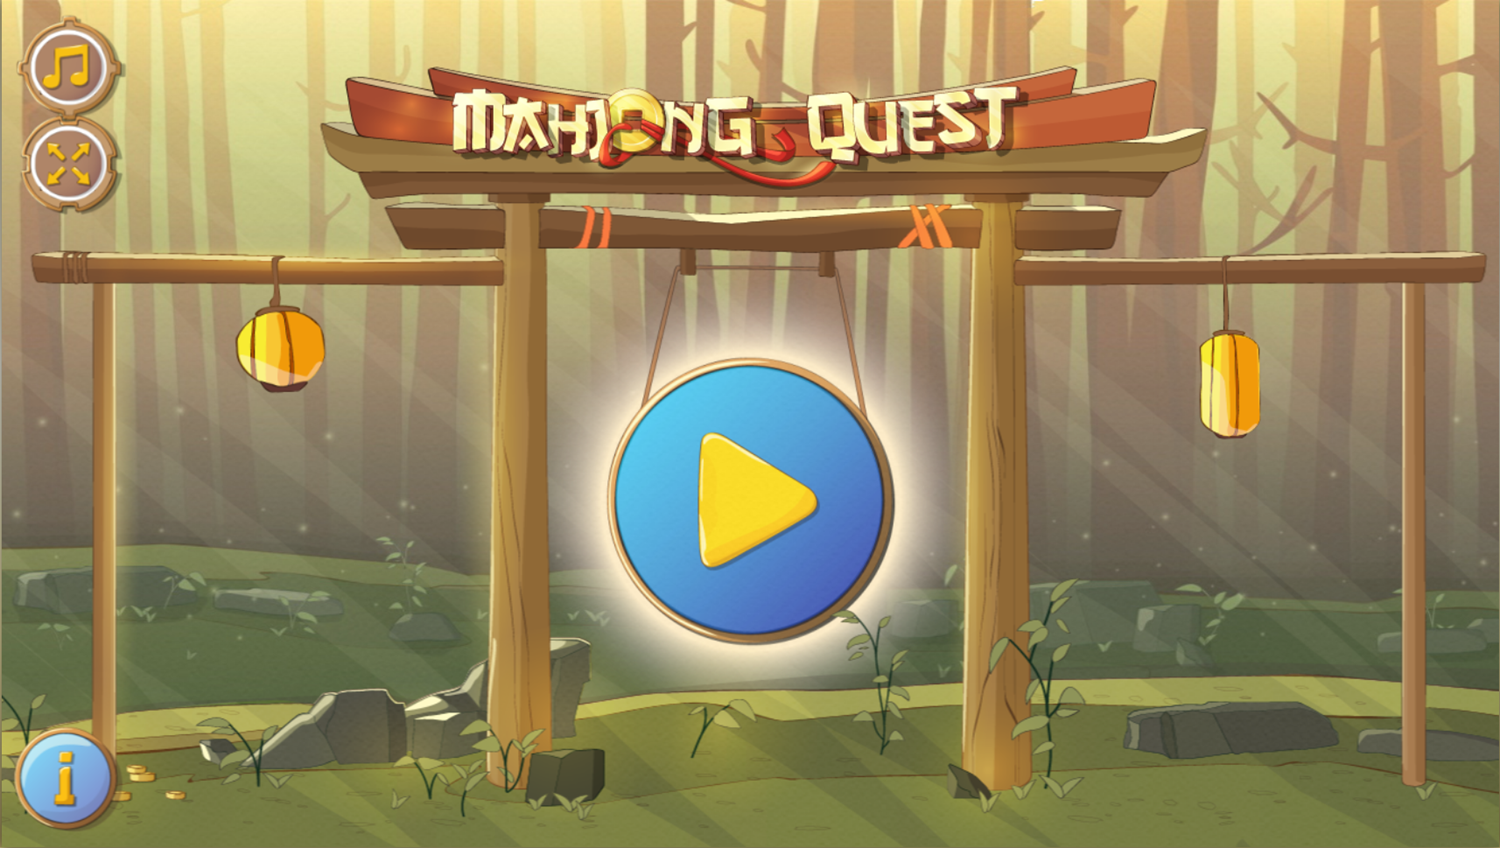 Mahjong Quest Game Welcome Screen Screenshot.